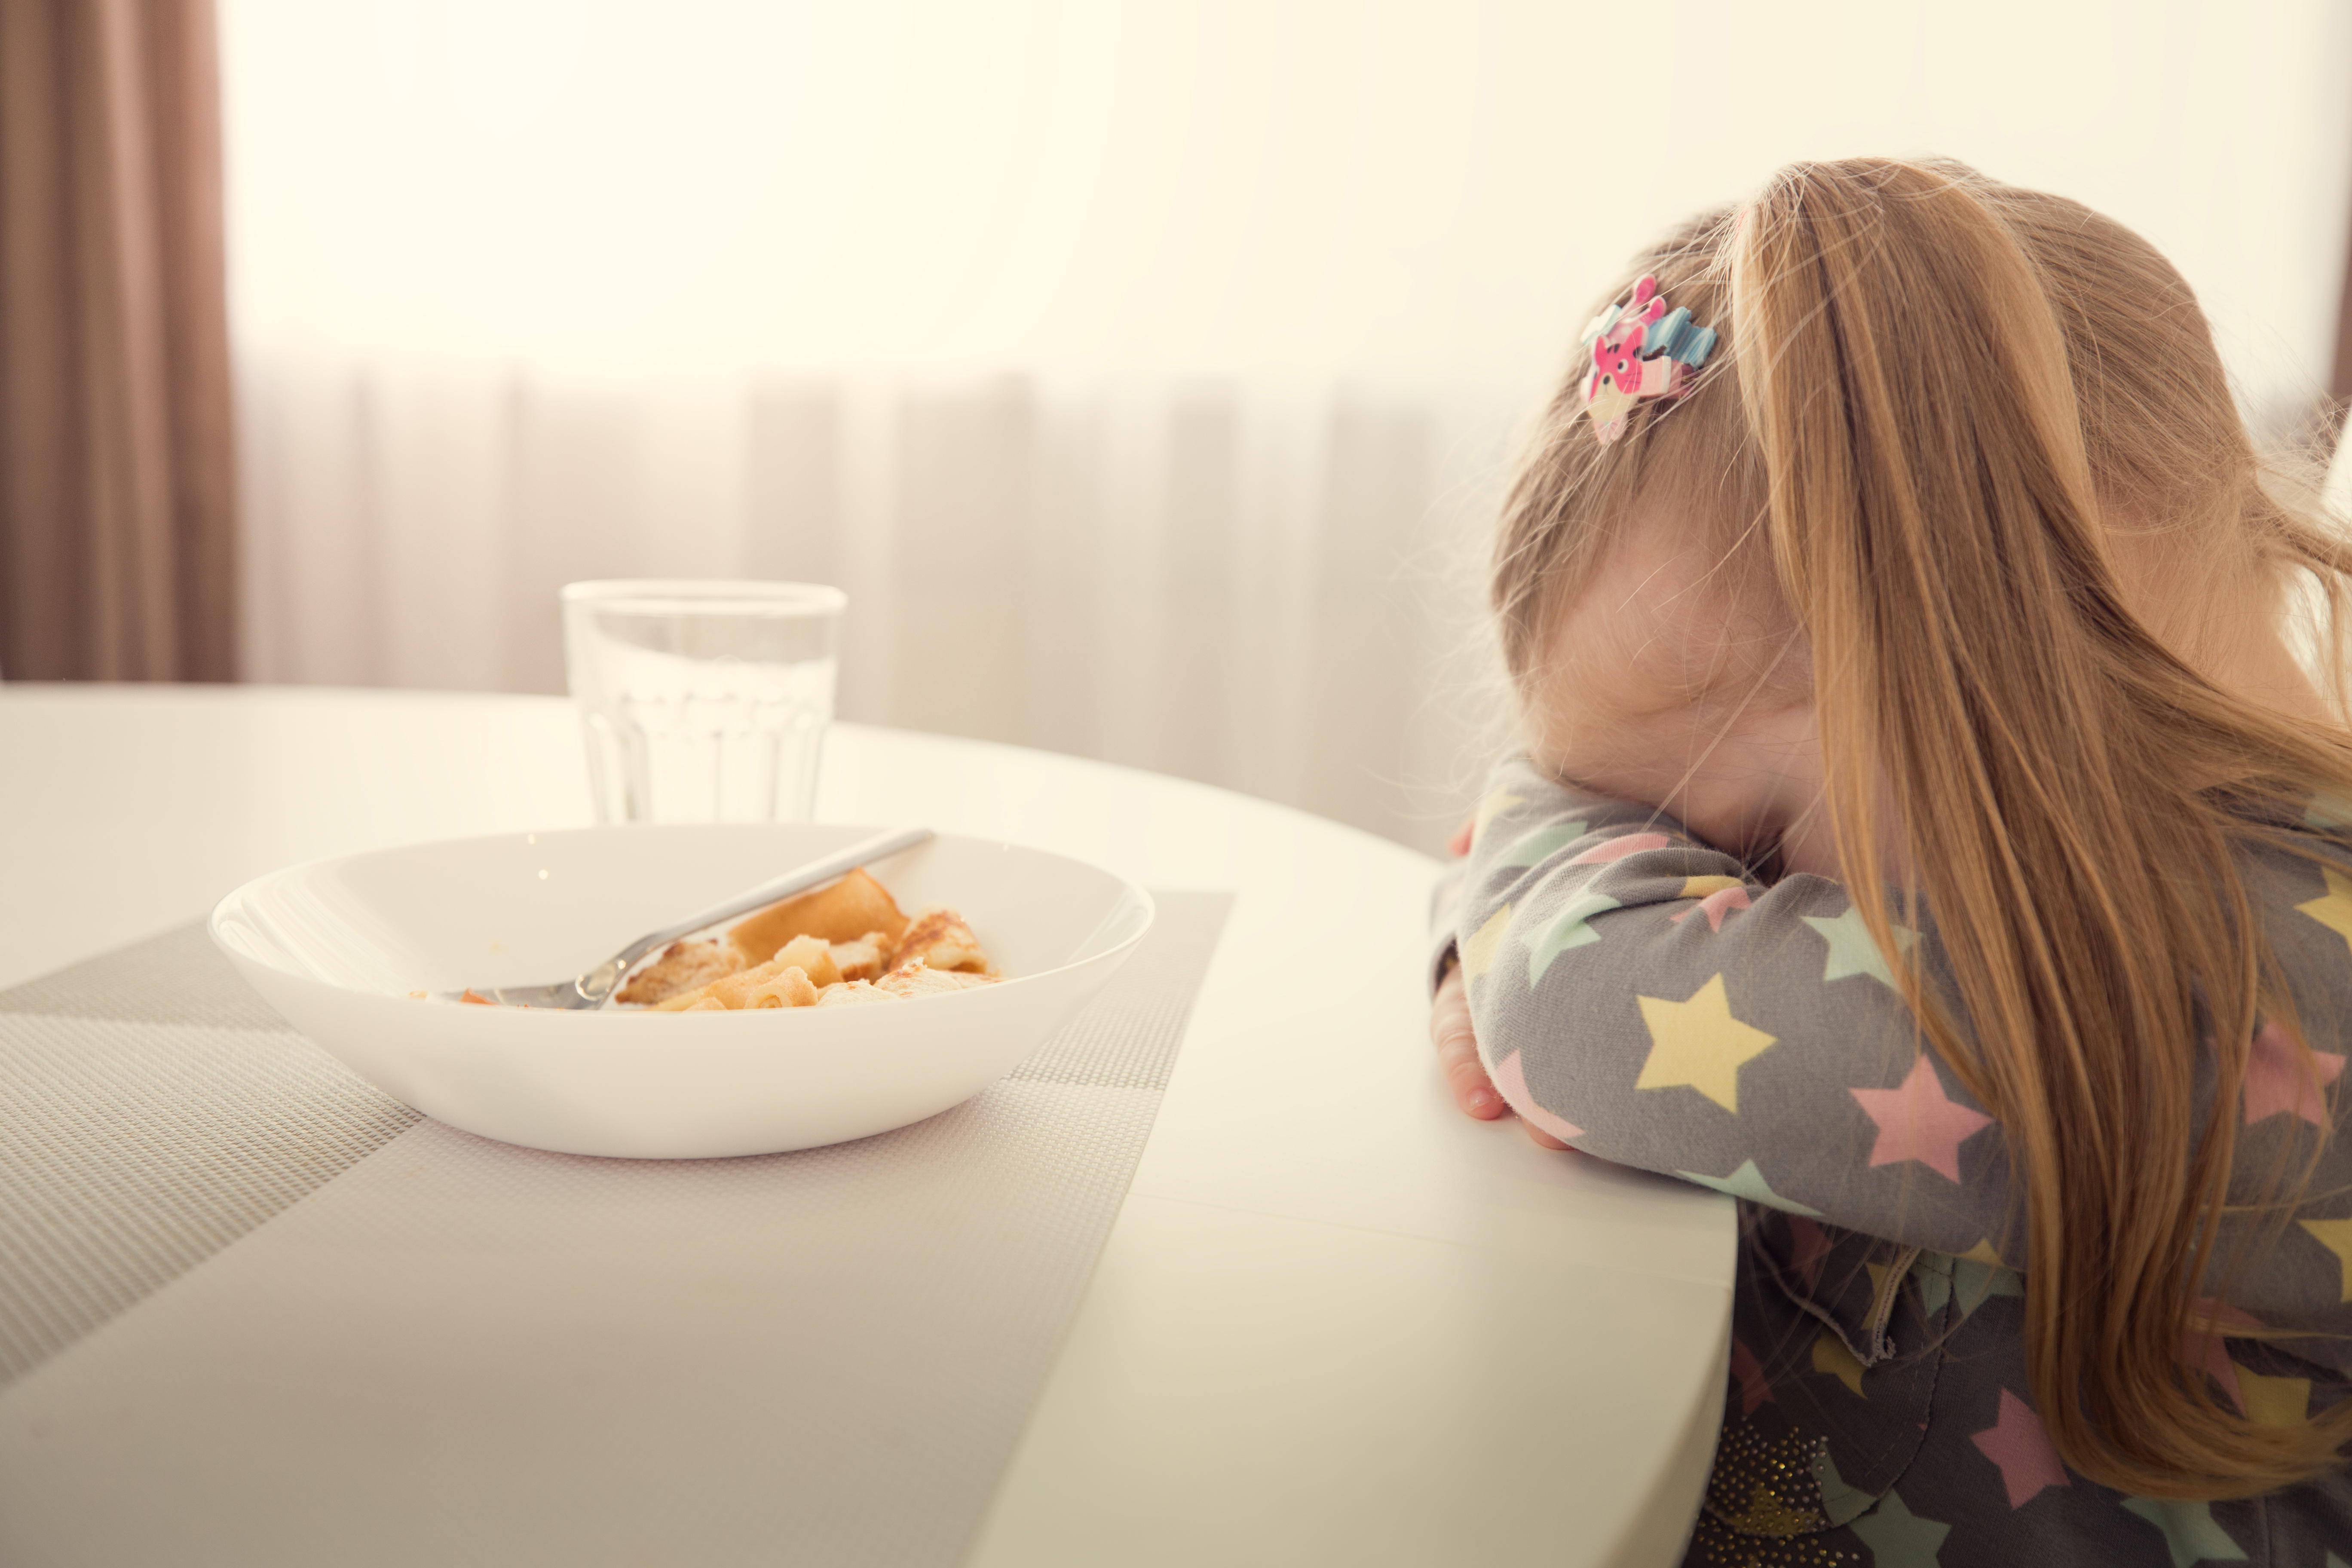 A little girl refusing to eat | Source: Shutterstock